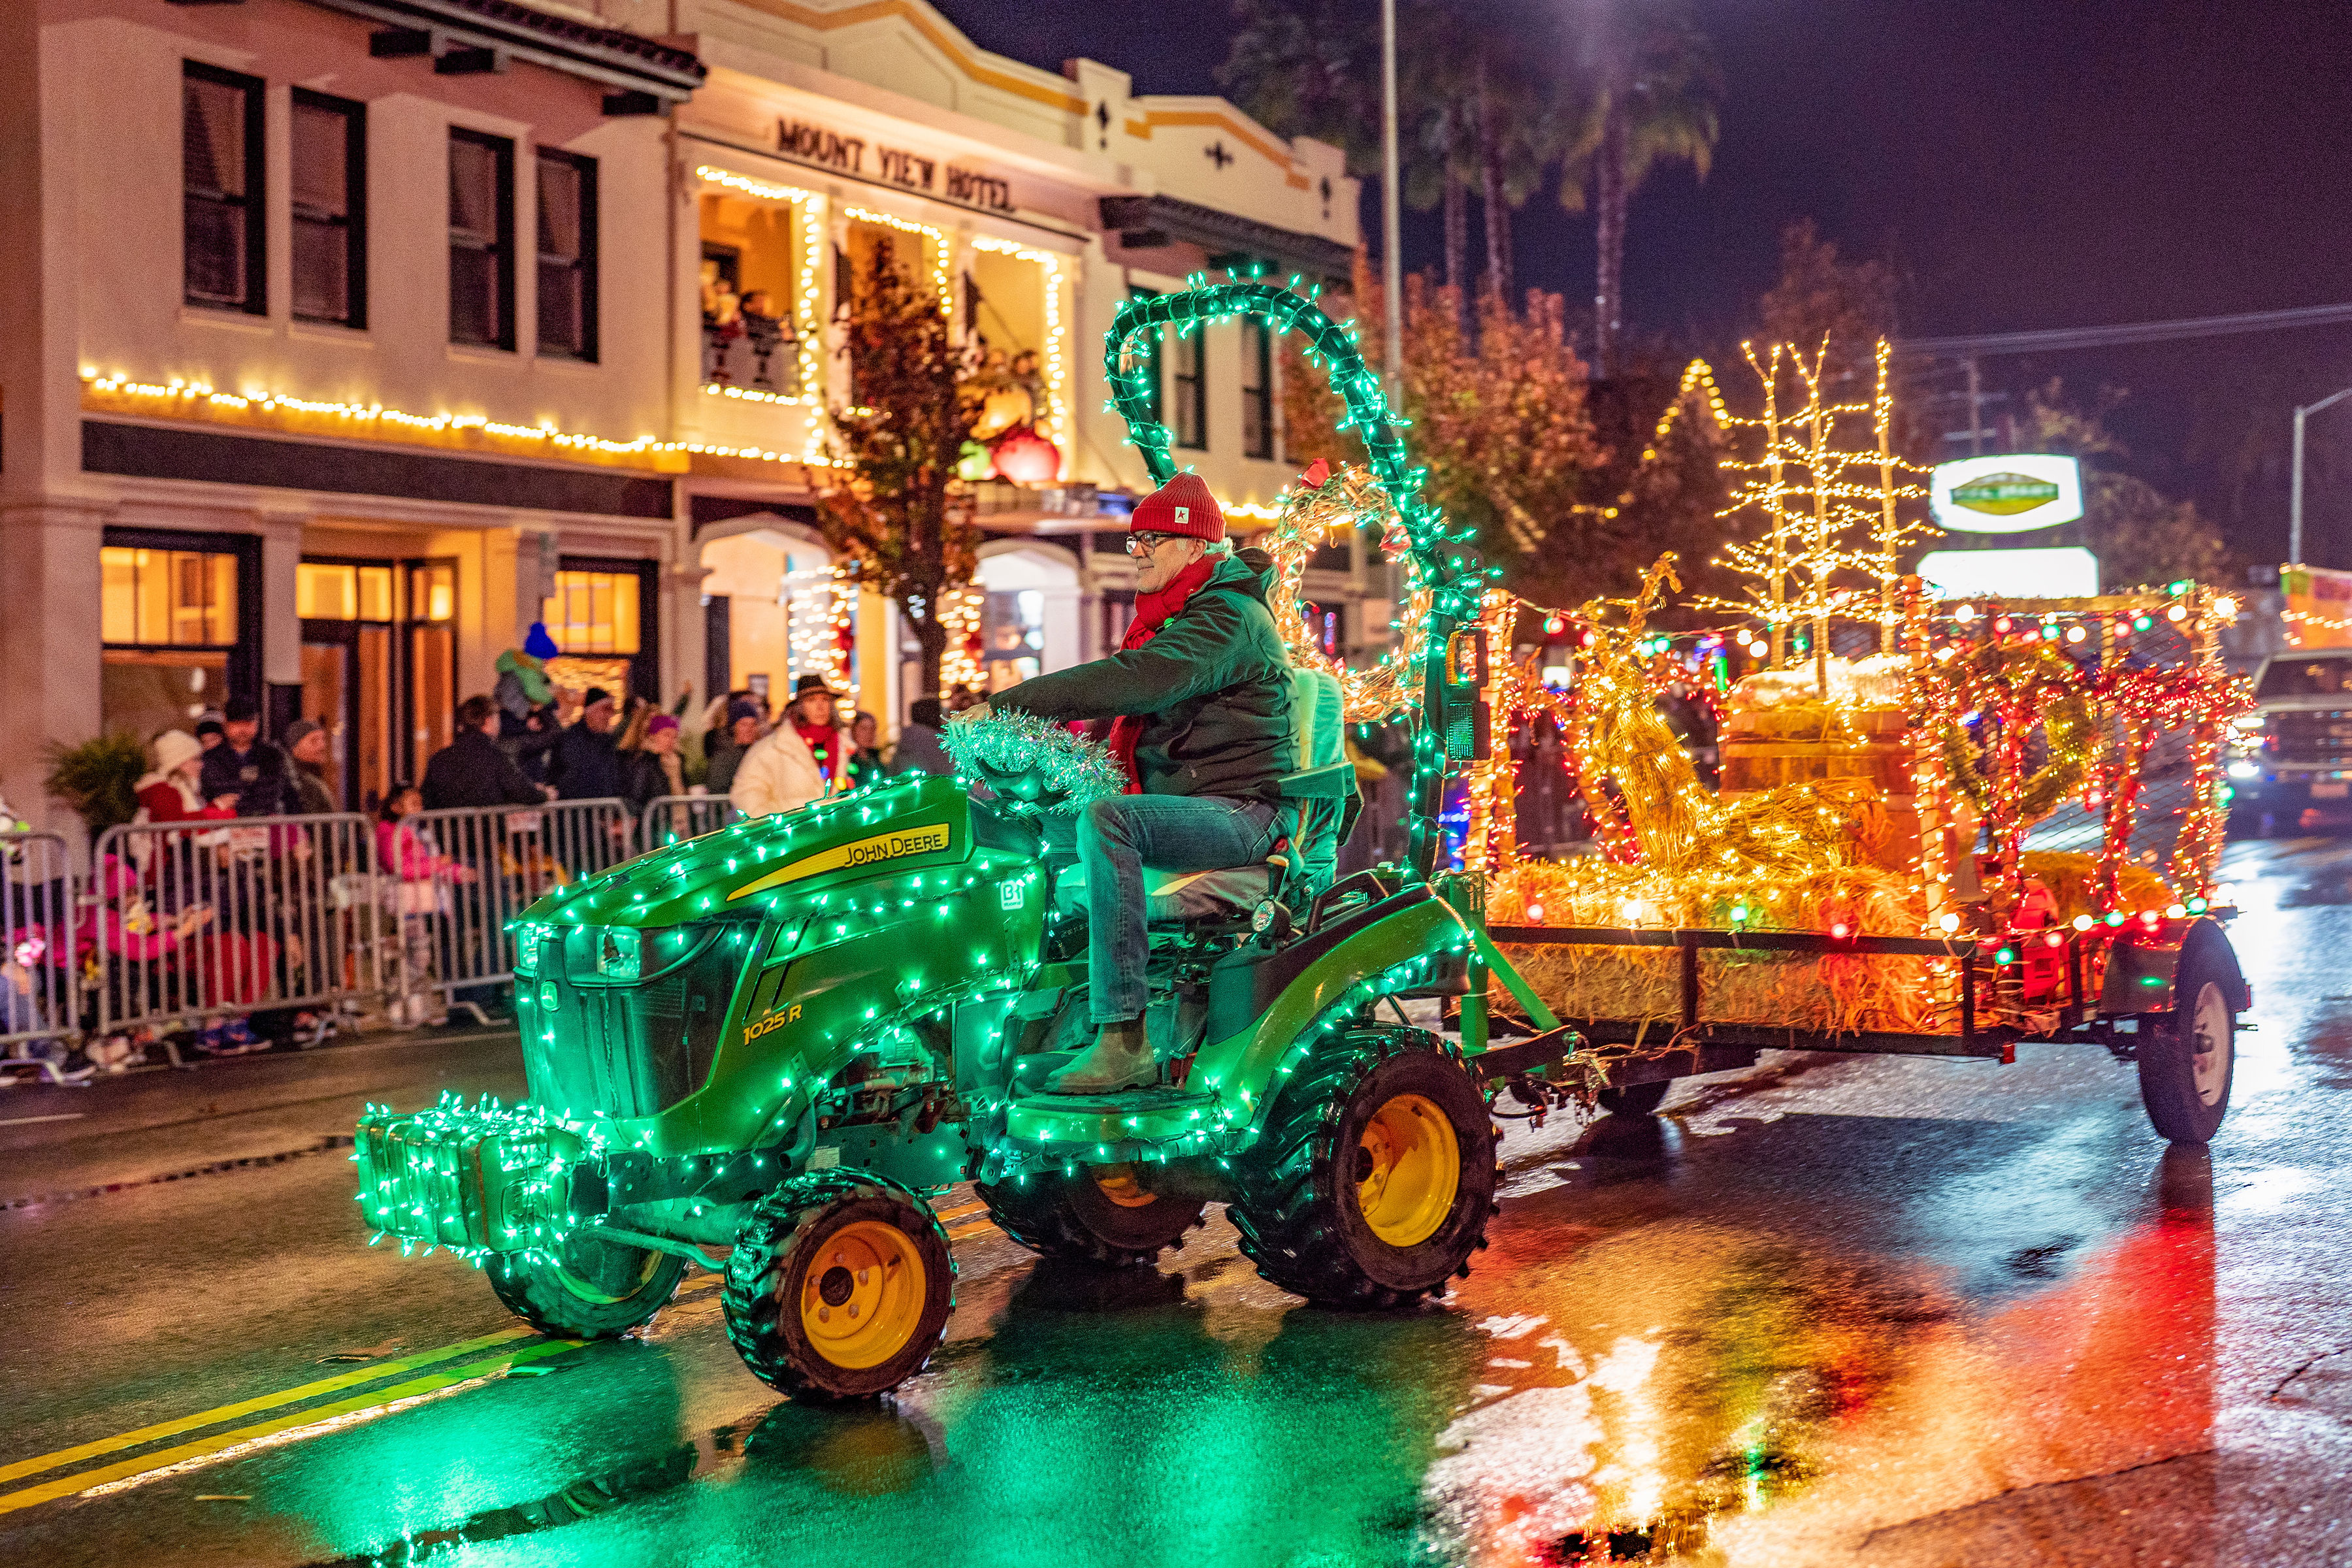 A man drives a green John Deere tractor illuminated in green holiday lights.